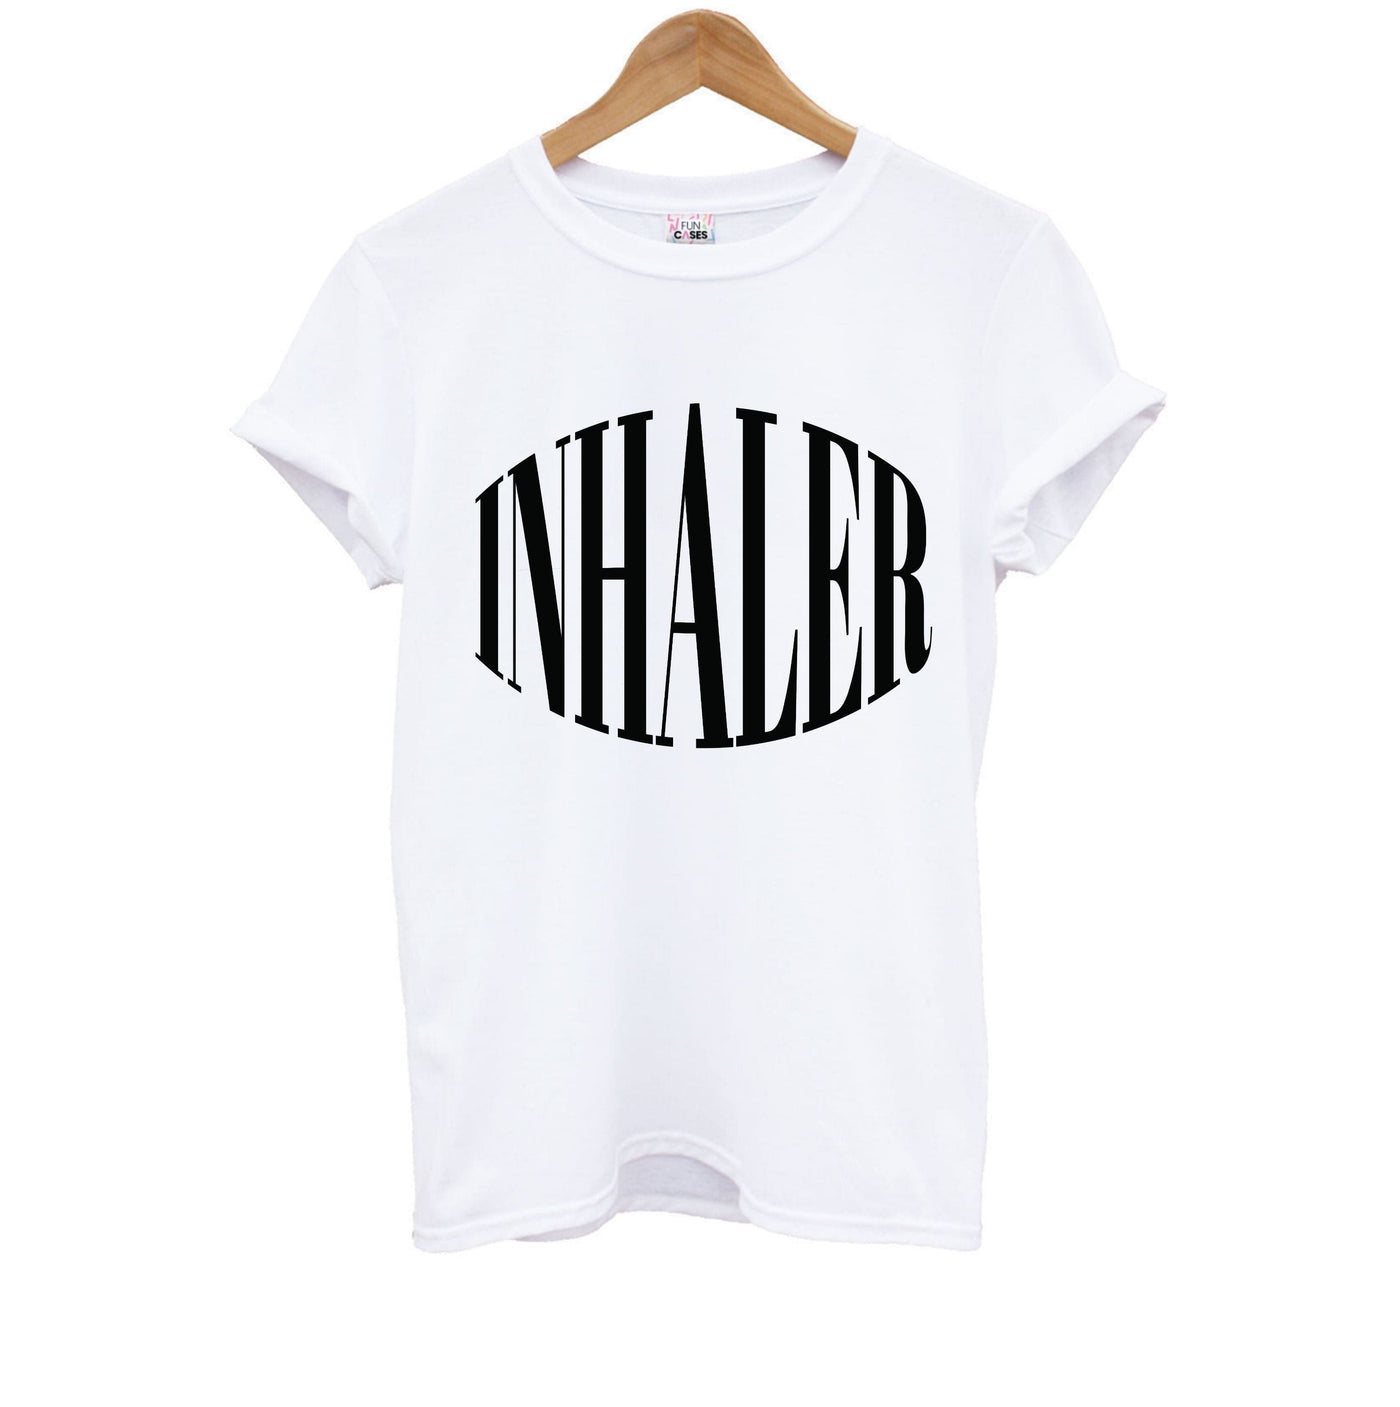 Name - Inhaler Kids T-Shirt